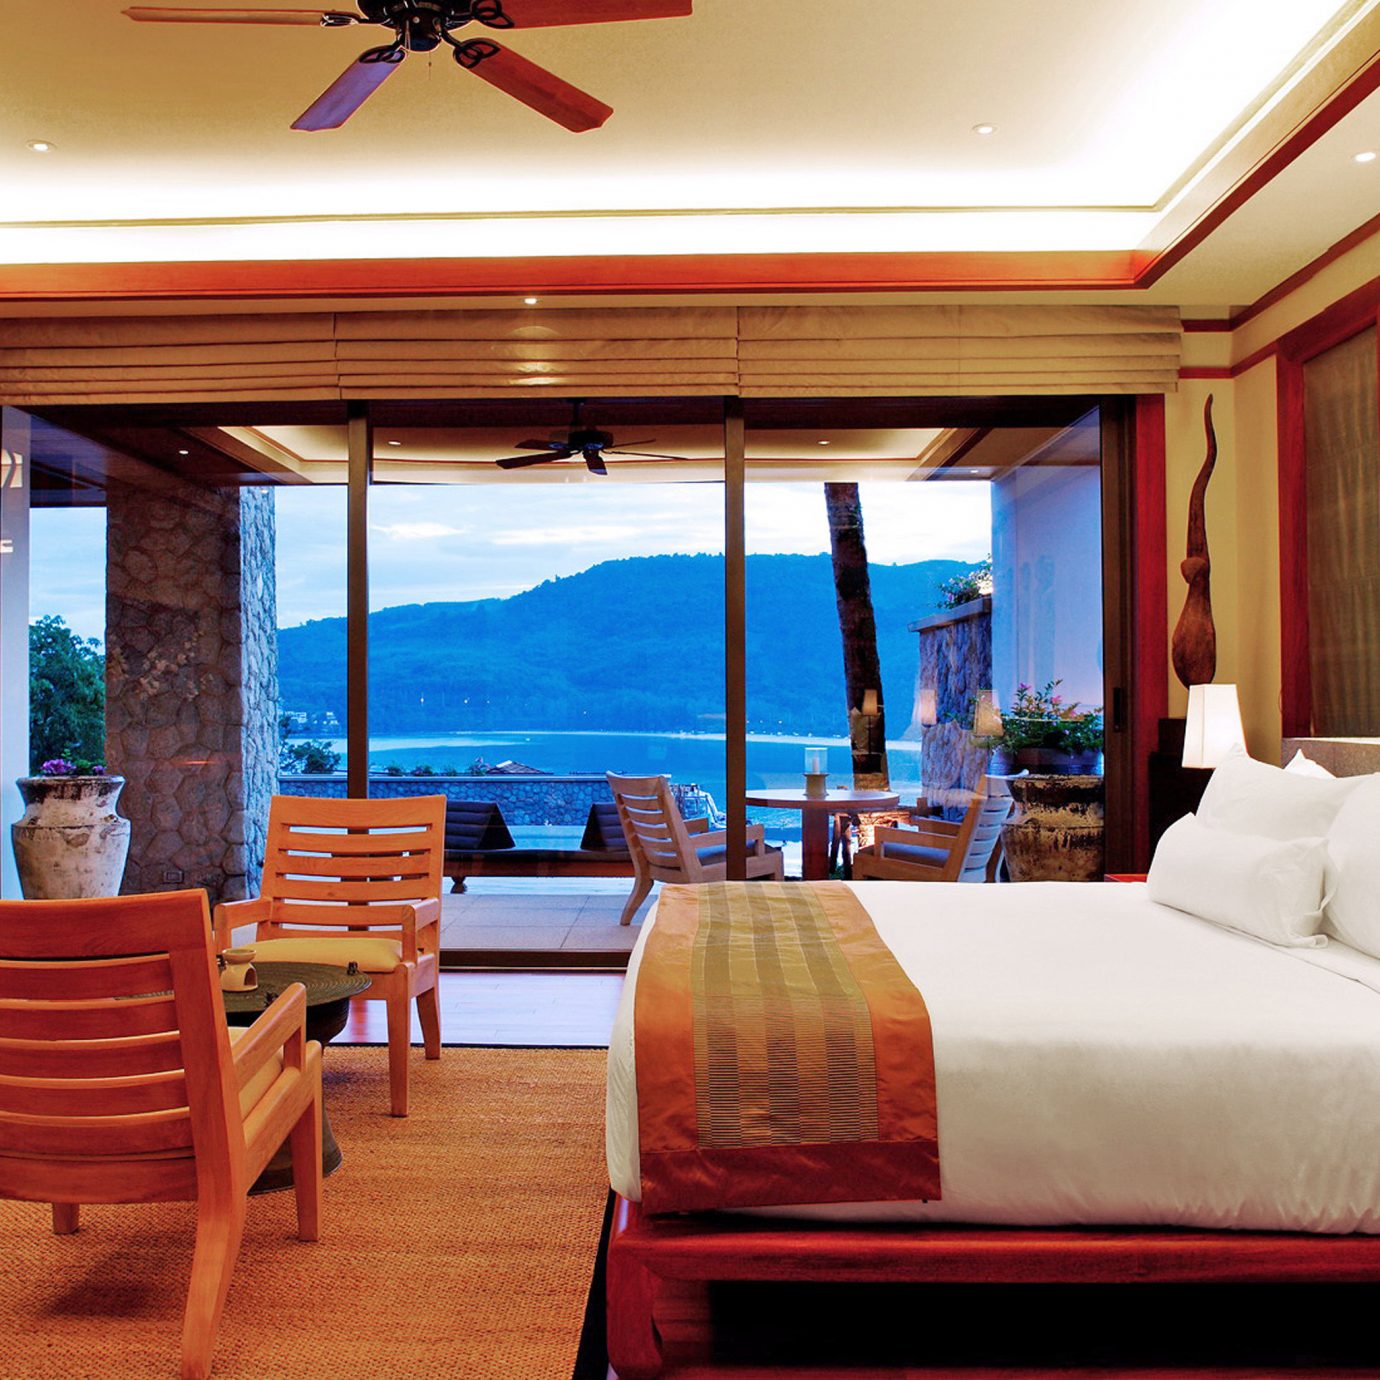 Balcony Beach Beachfront Bedroom Hotels Scenic views Tropical Waterfront Resort Suite restaurant Villa